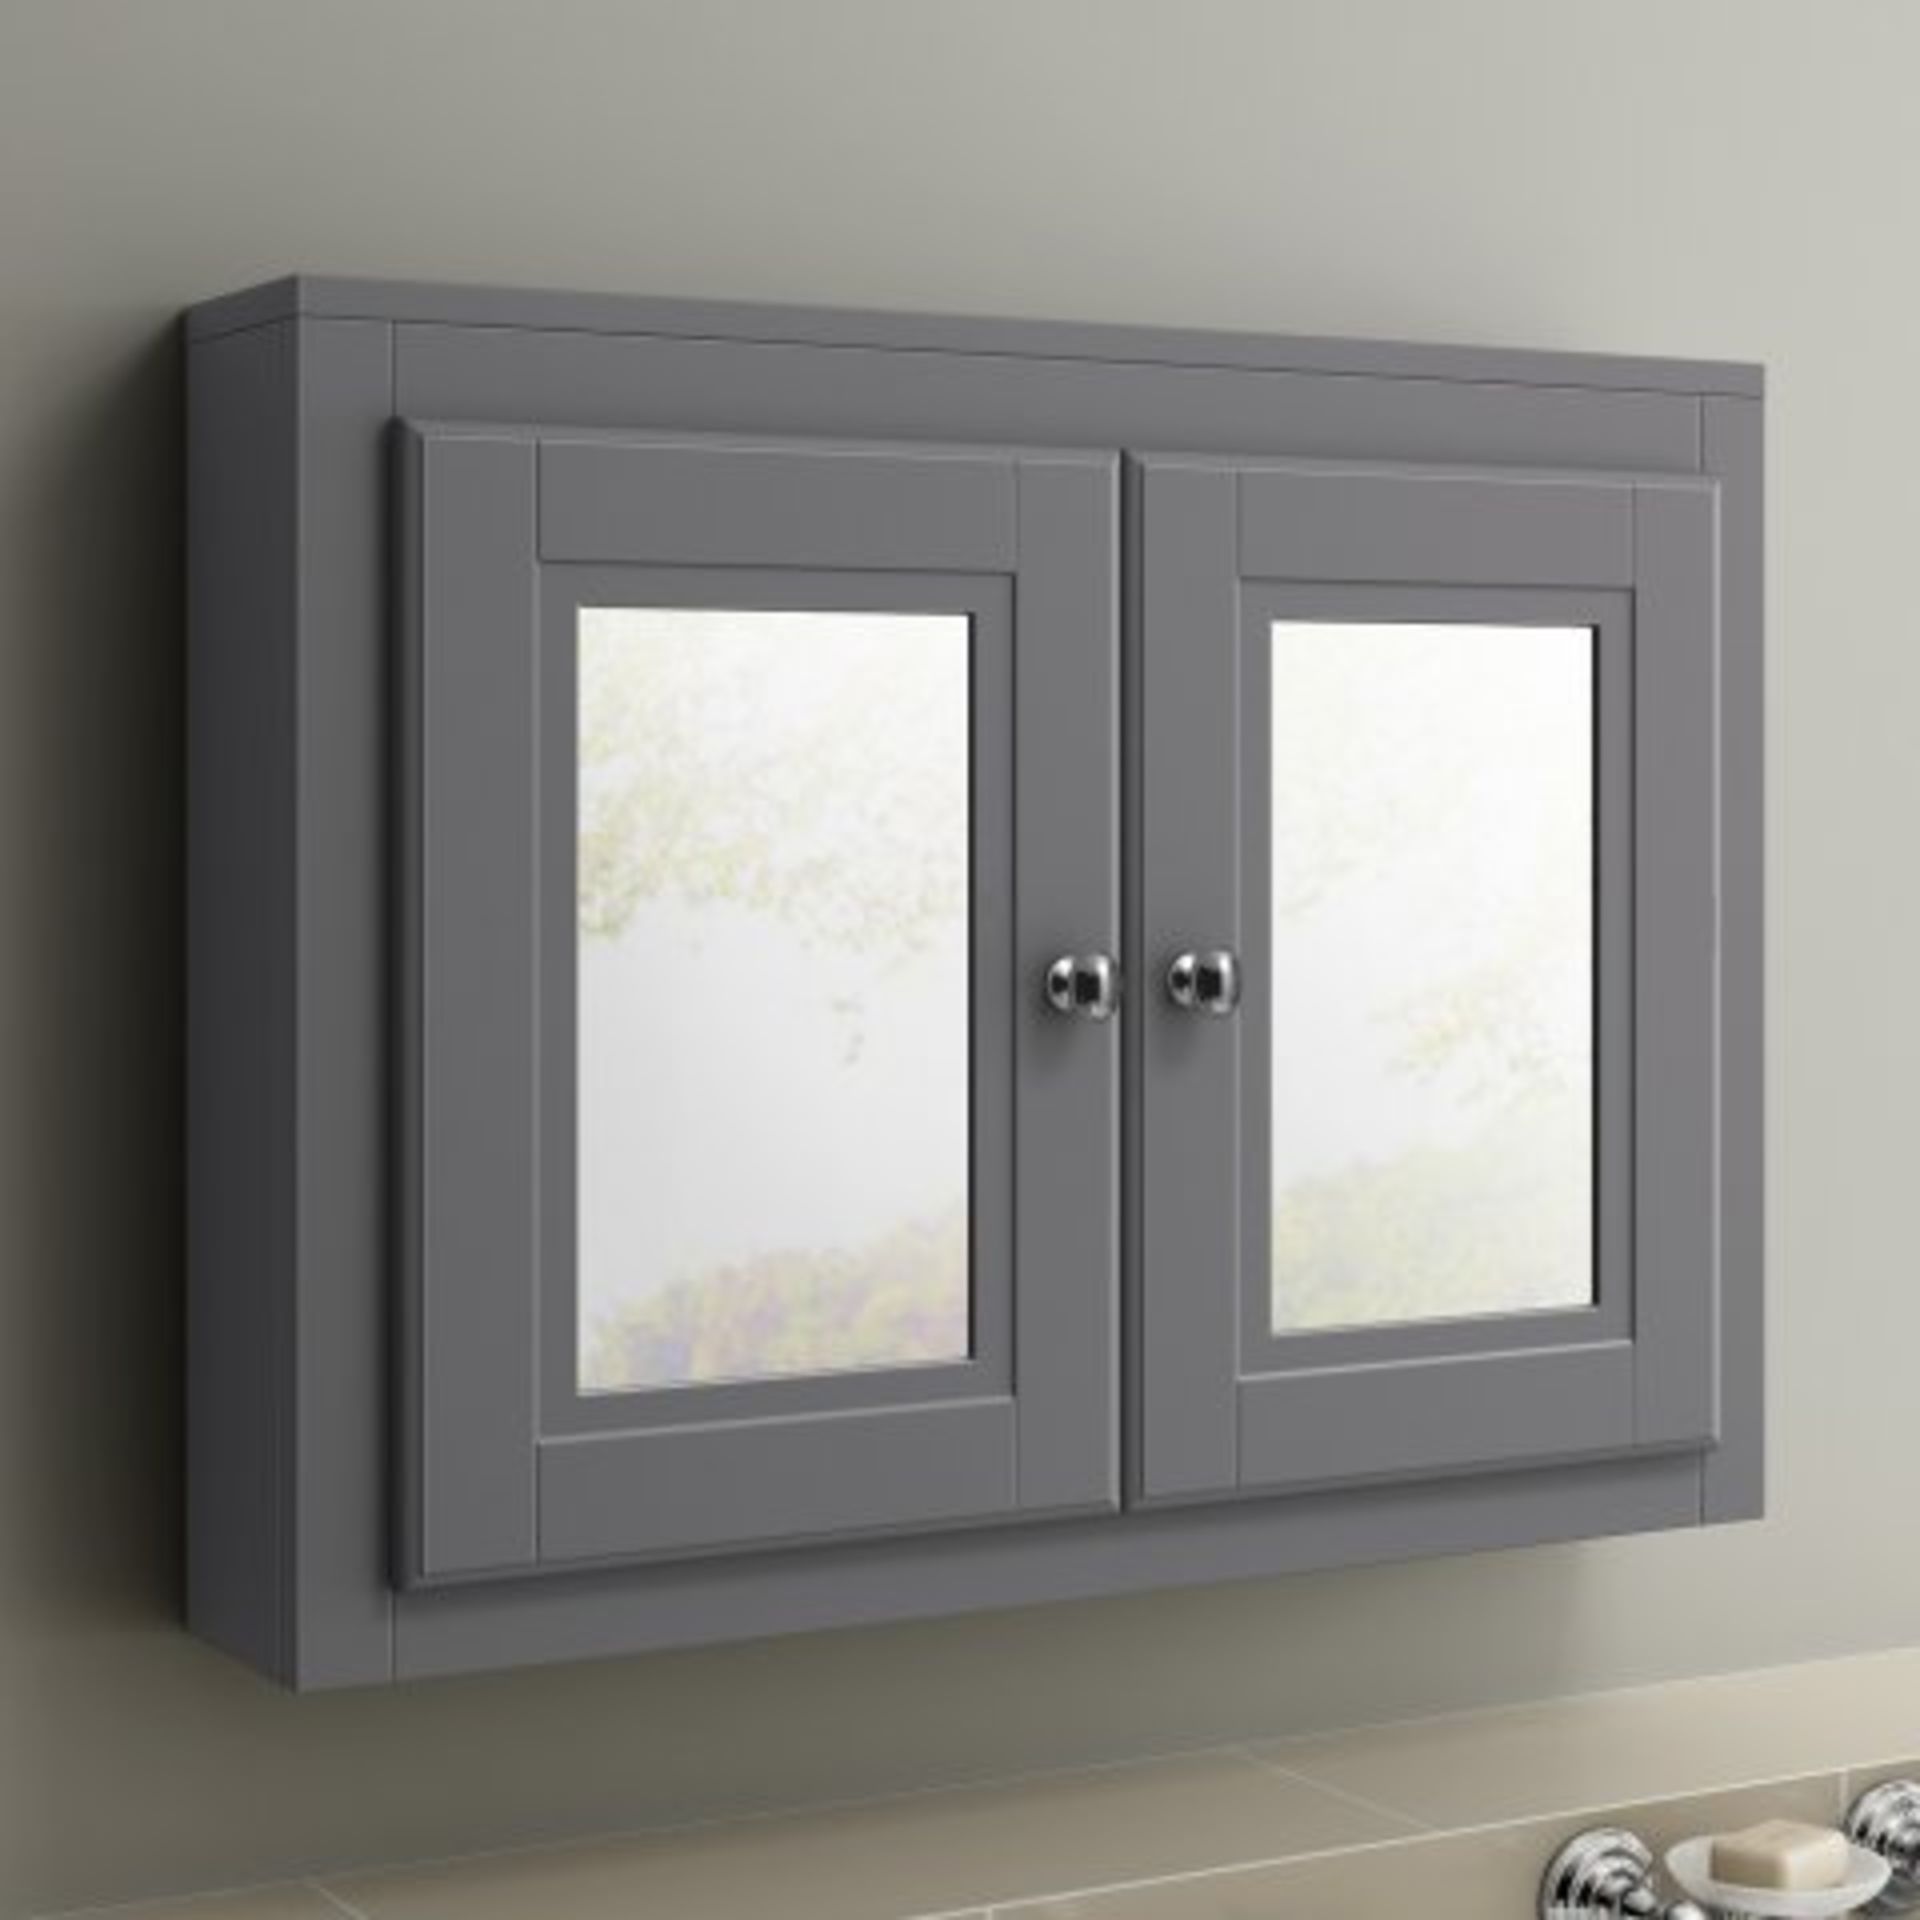 (H24) 800mm Cambridge Midnight Grey Double Door Mirror Cabinet. RRP £299.99. Our Cambridge